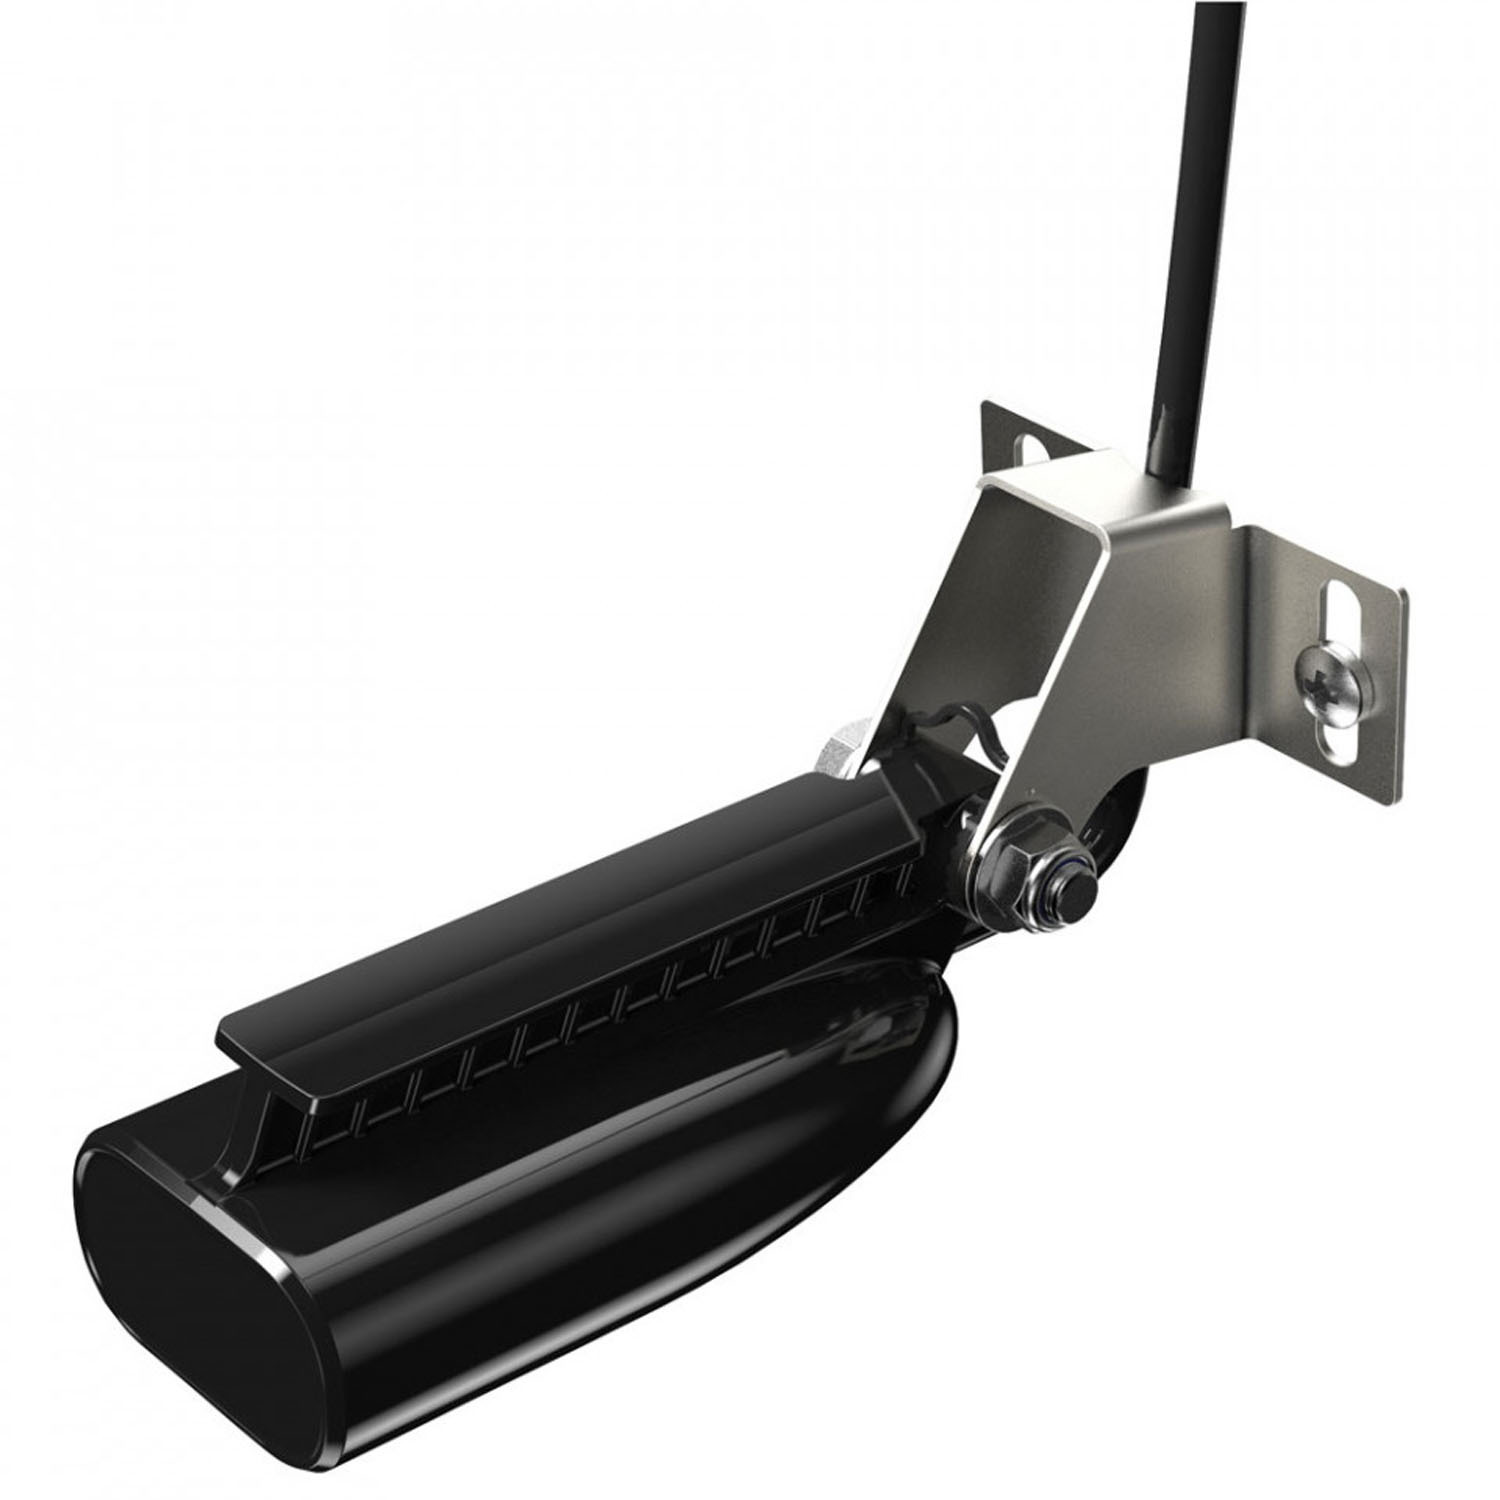 Lowrance Splitshot Skimmer Transducer Suits Hook2 5x, 5, 7x, 7 Models HDI  Broadband Chirp Downscan I